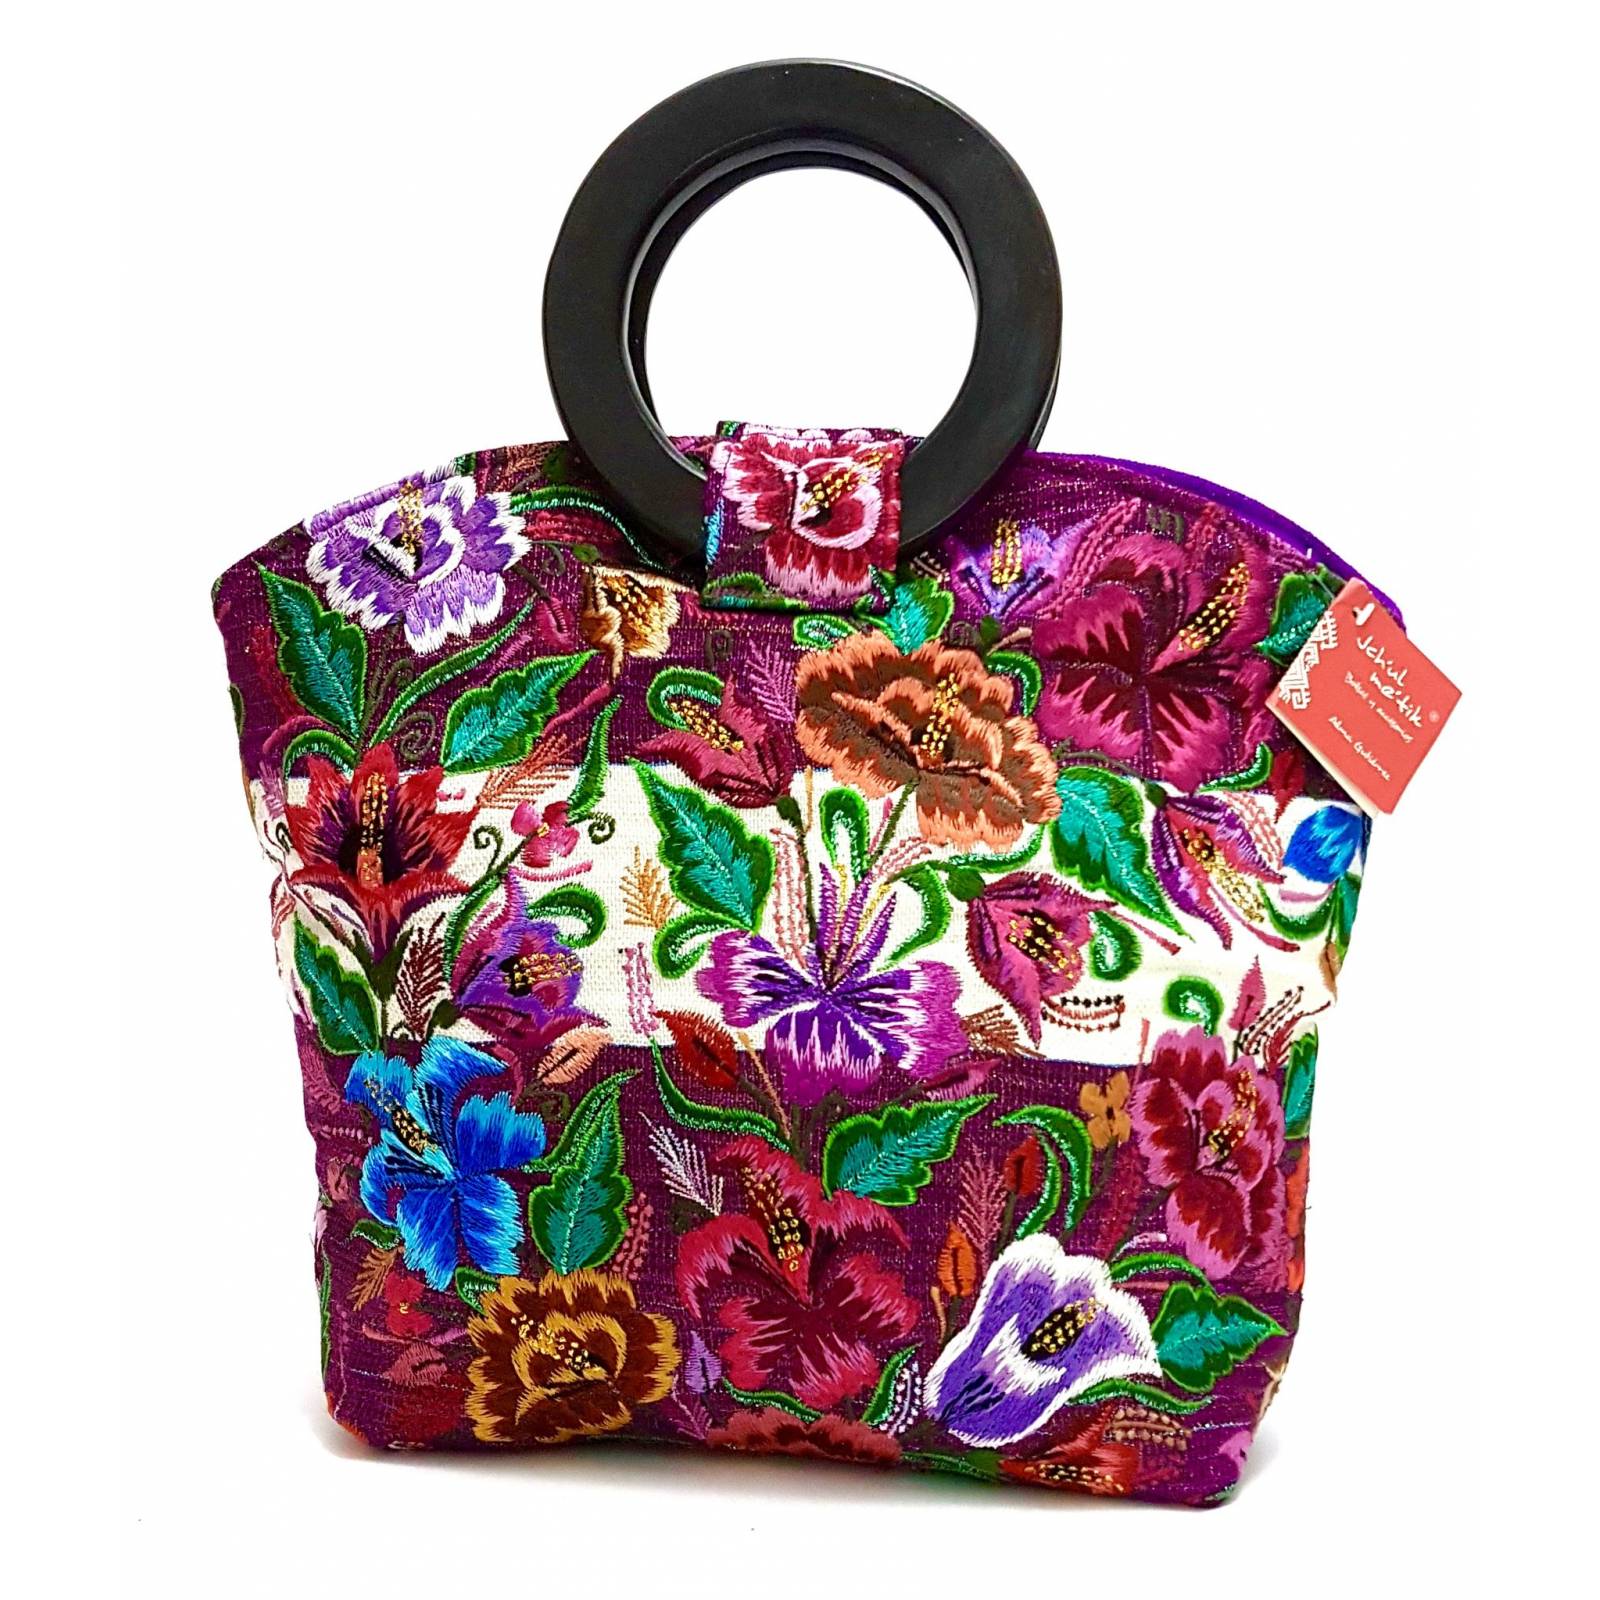 Bolsa De Diseñadora Mexicana Con Bordado Artesanal Chiapanenco Jchul metik Modelo Tenam Flores Lilas